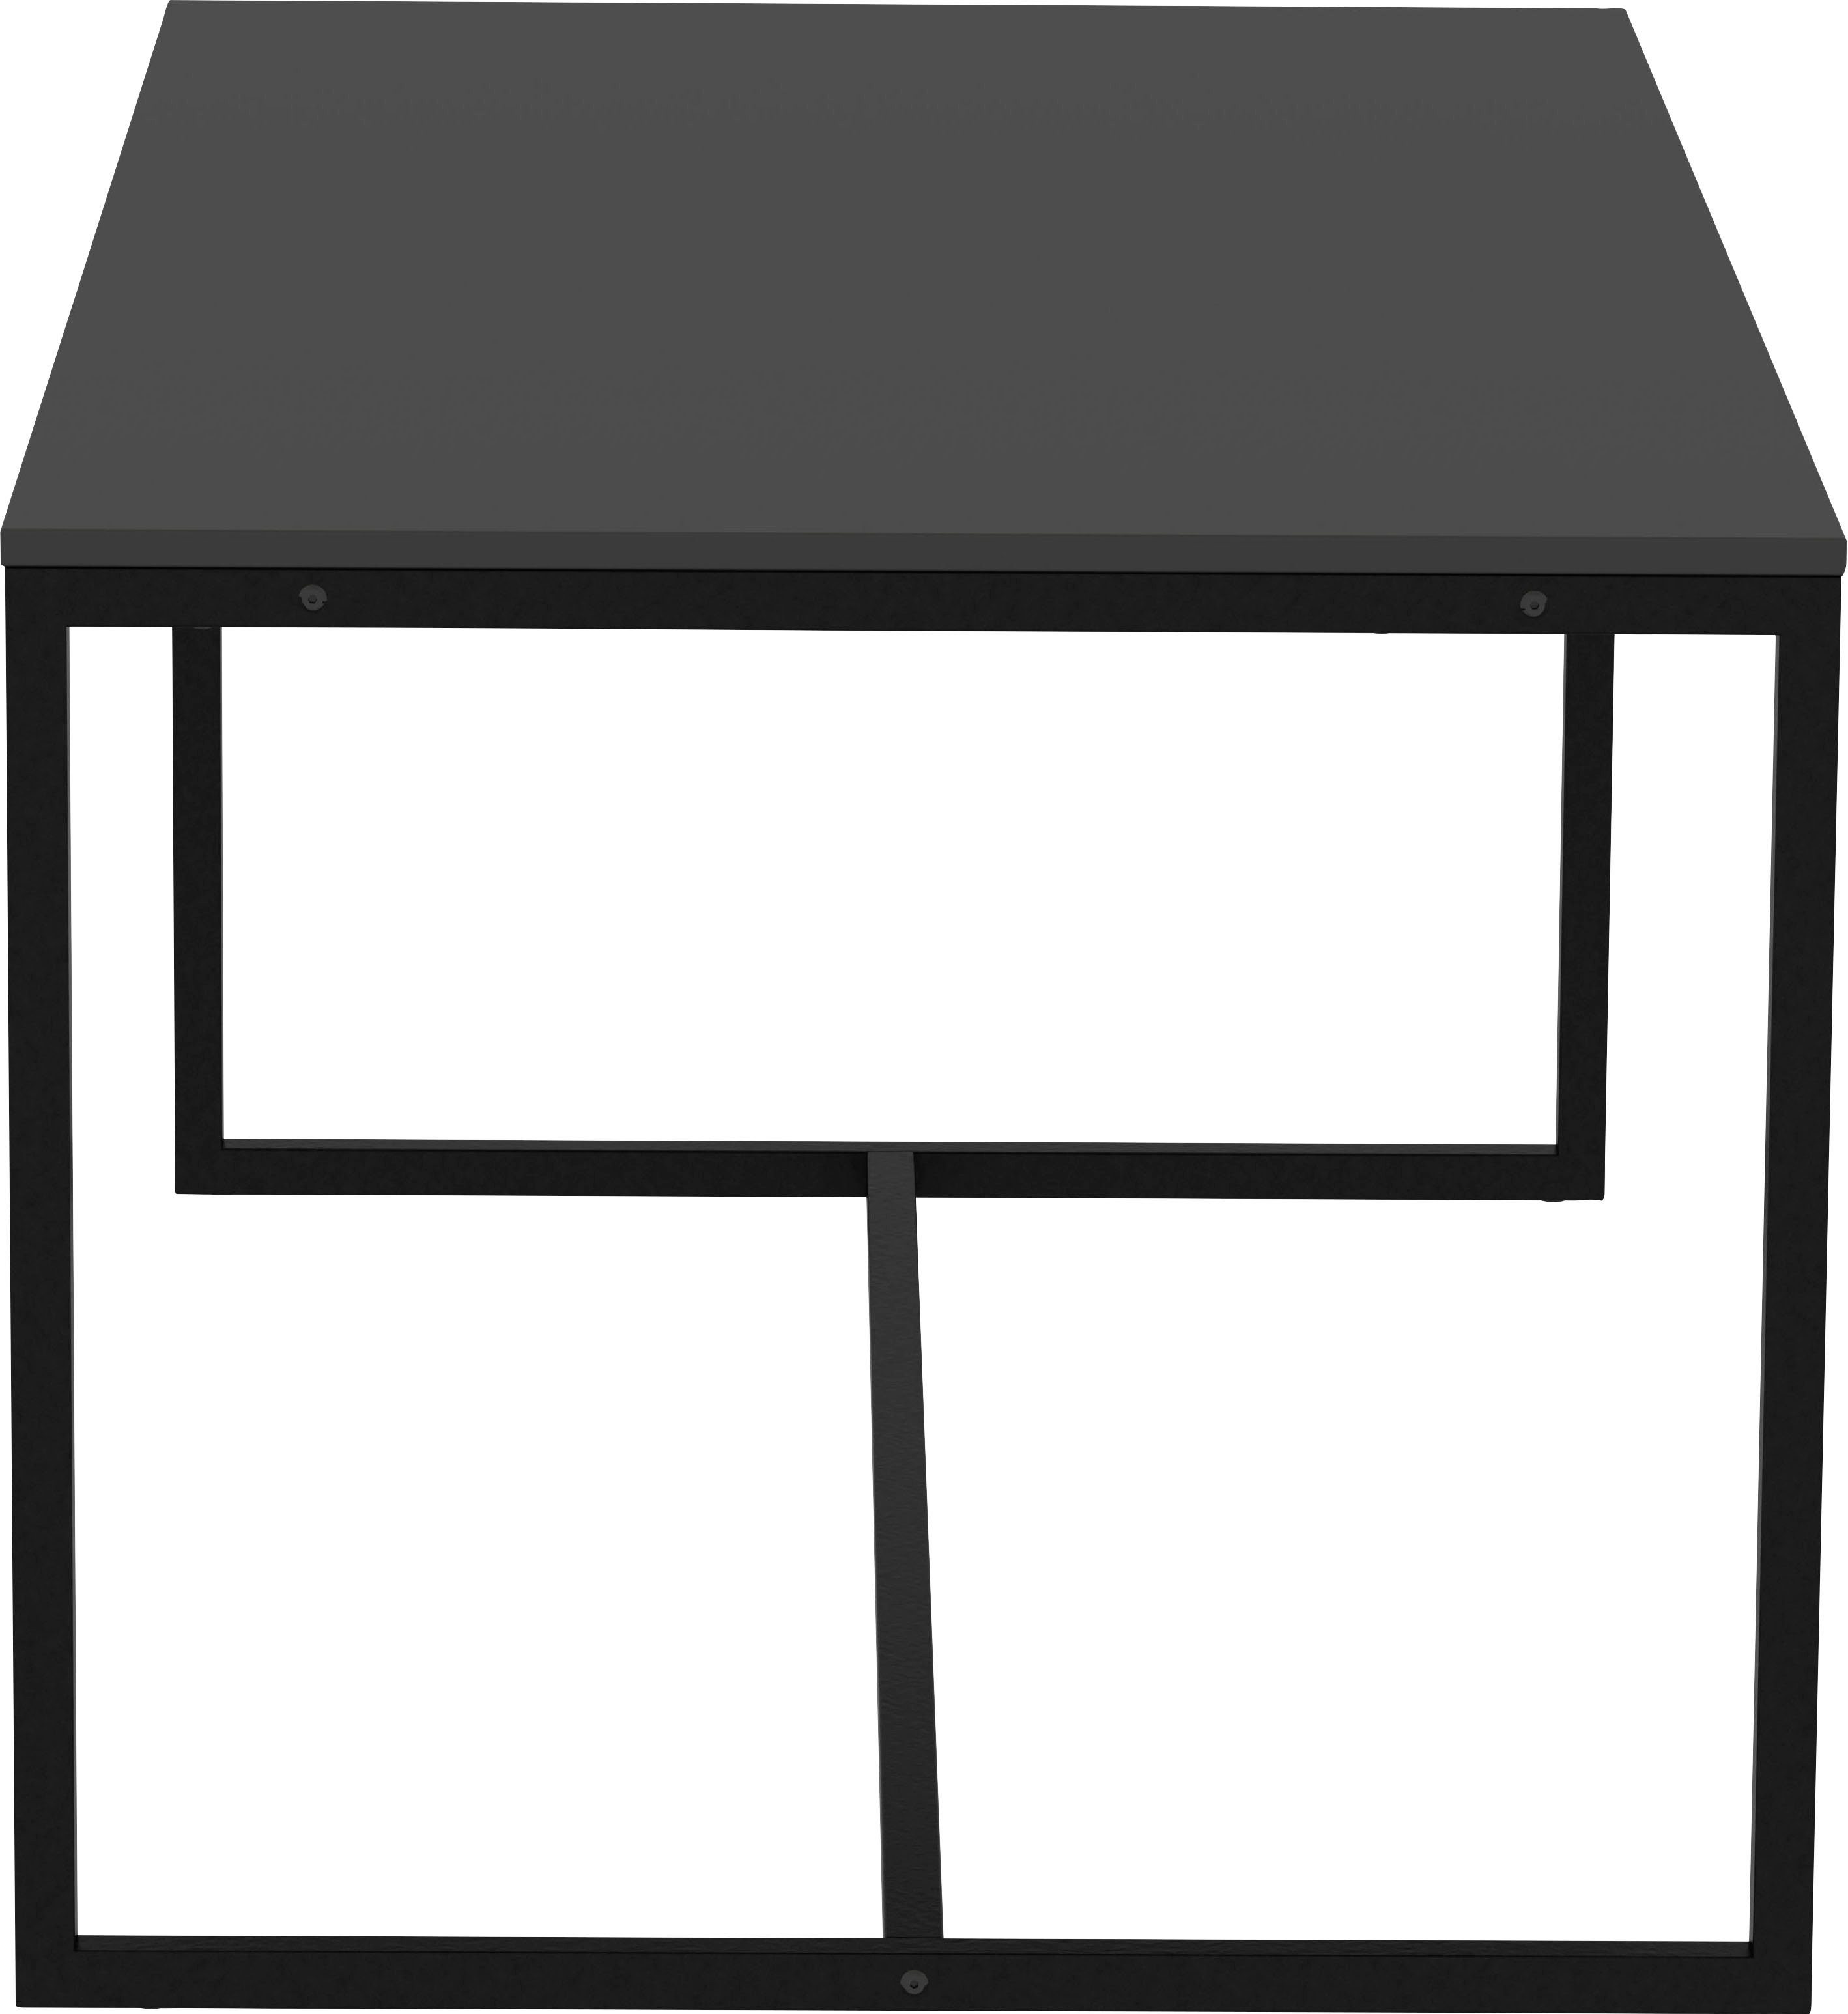 Tenzo Esstisch LIPP, Design schwarz studio, 180 shadow Tenzo Design schwarz Breite cm shadow von 